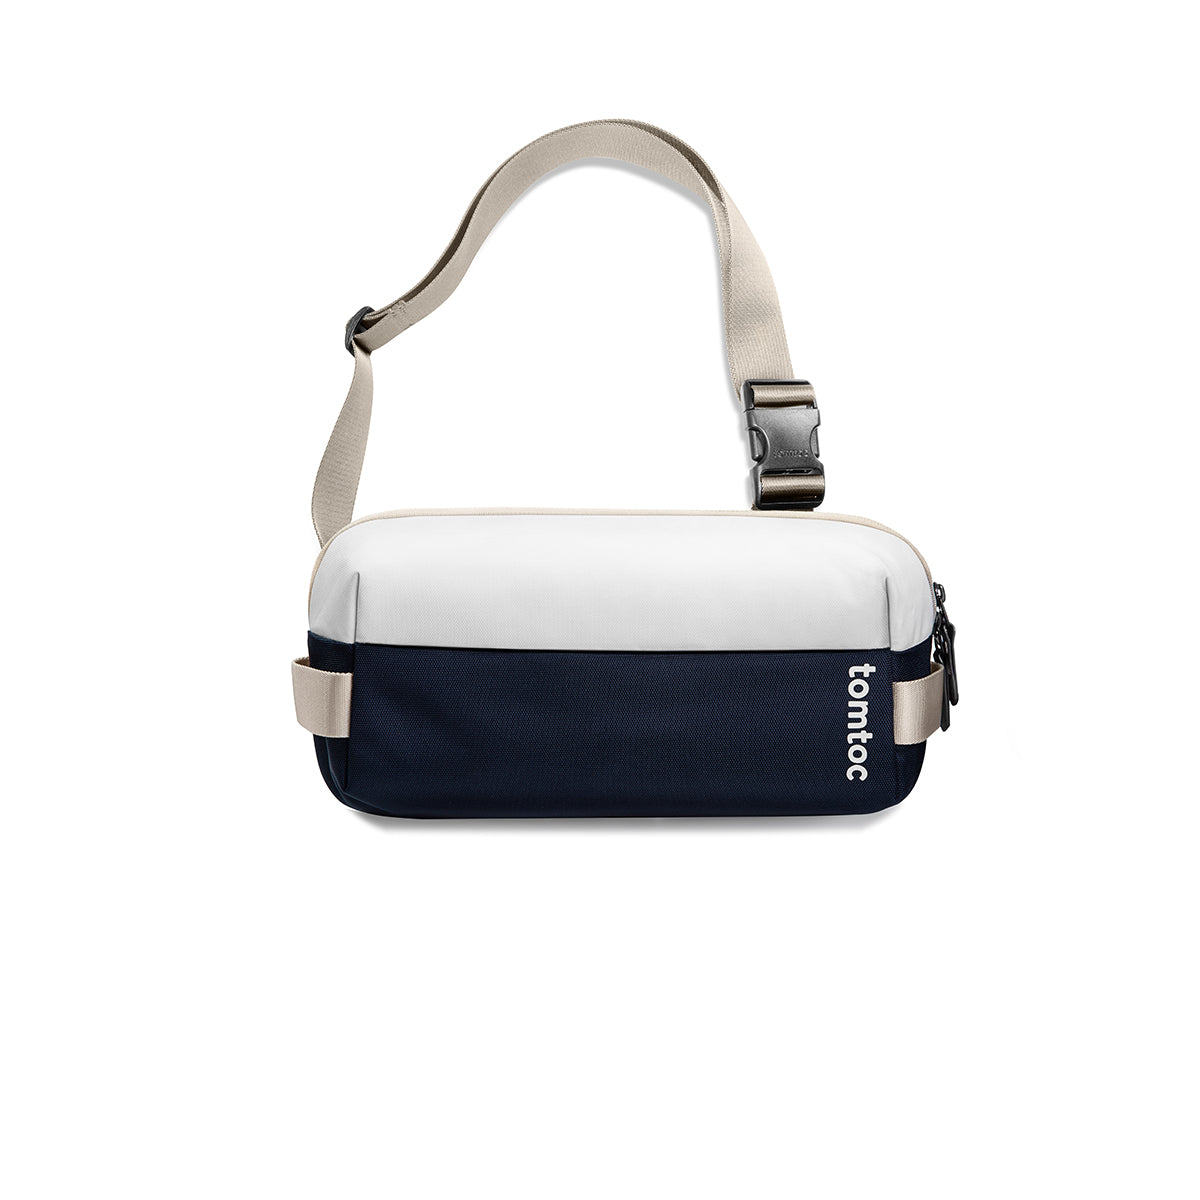 Tomtoc Explorer-H02 Urban Sling Bag with Minimalist EDC Design for iPad Mini 6